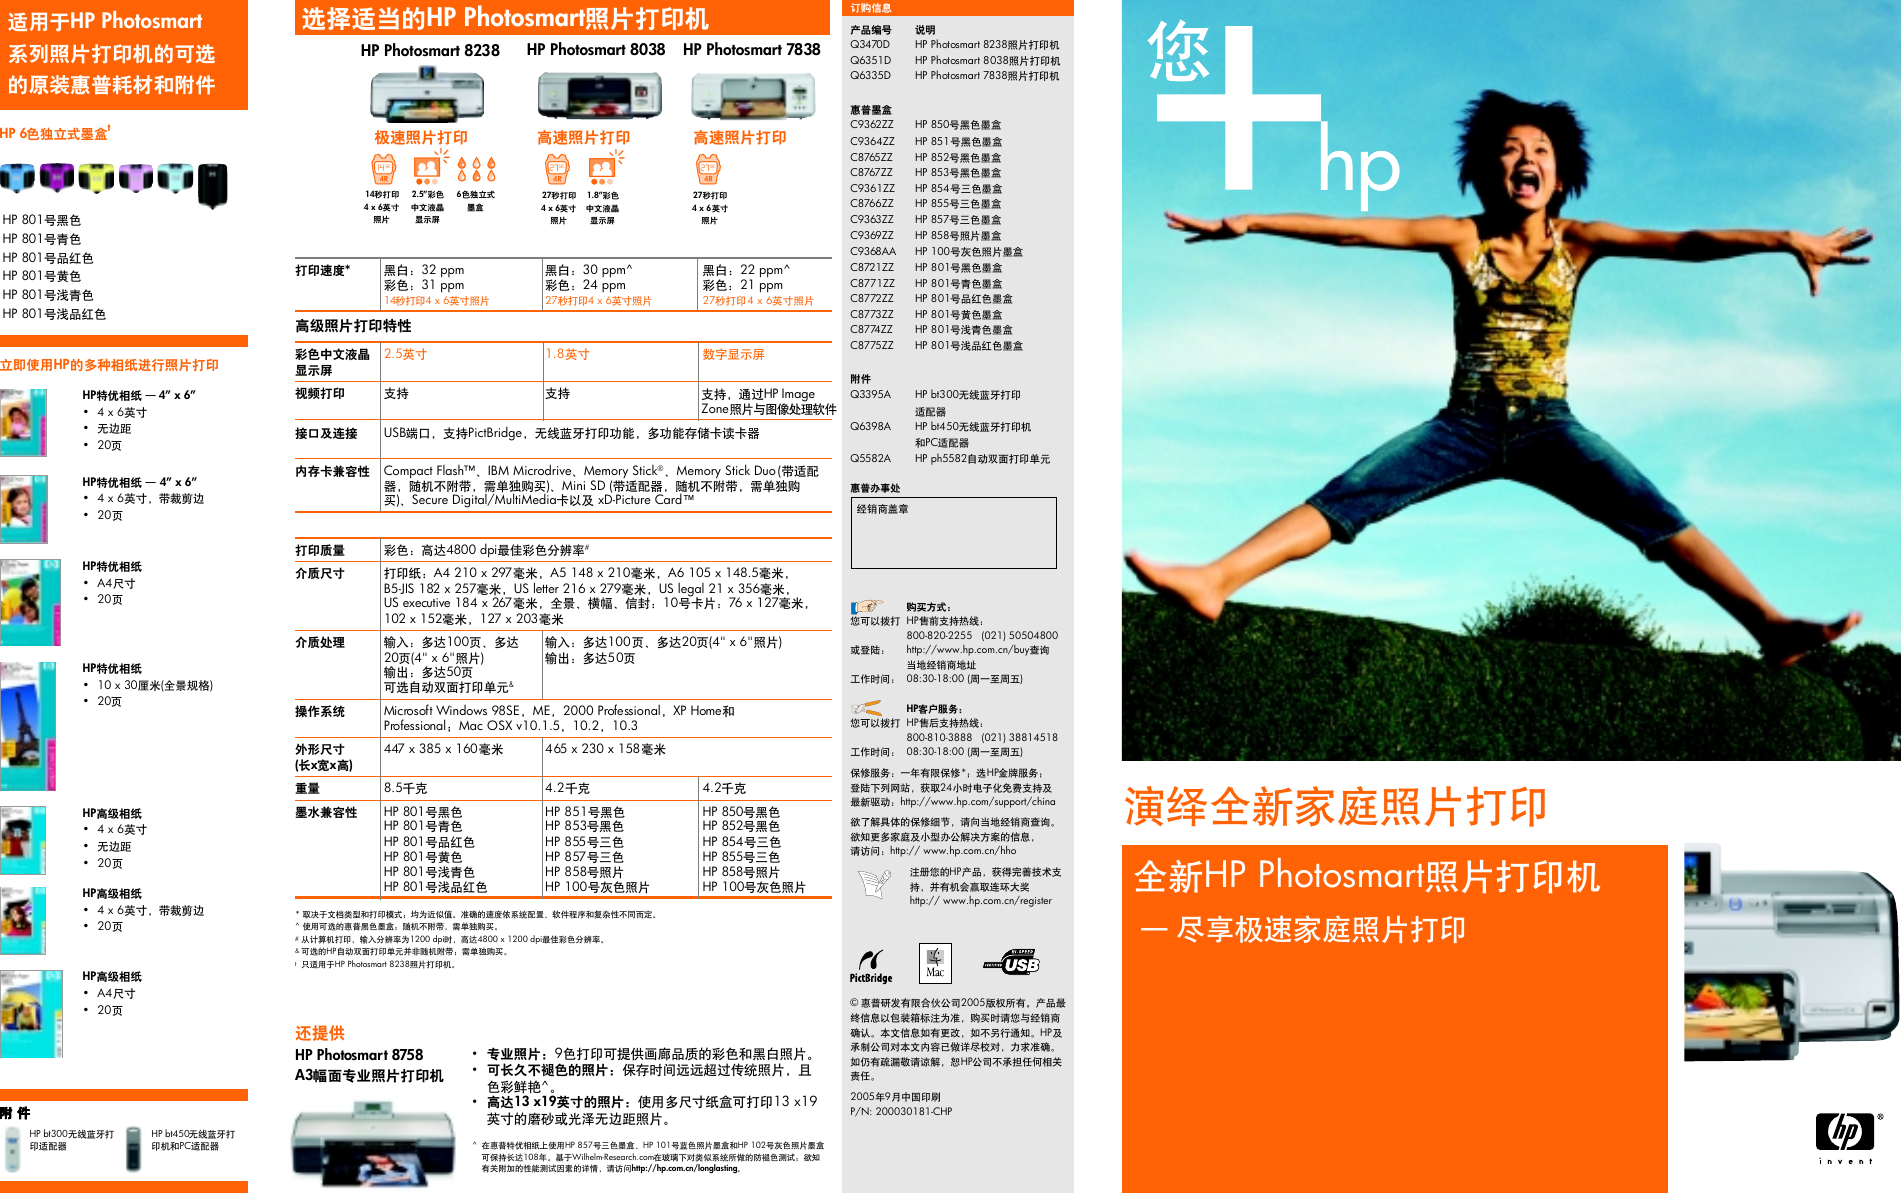 Page 1 of 4 - HP 050801139_1 Photosmart 8038 - 产品规格说明 C00657252